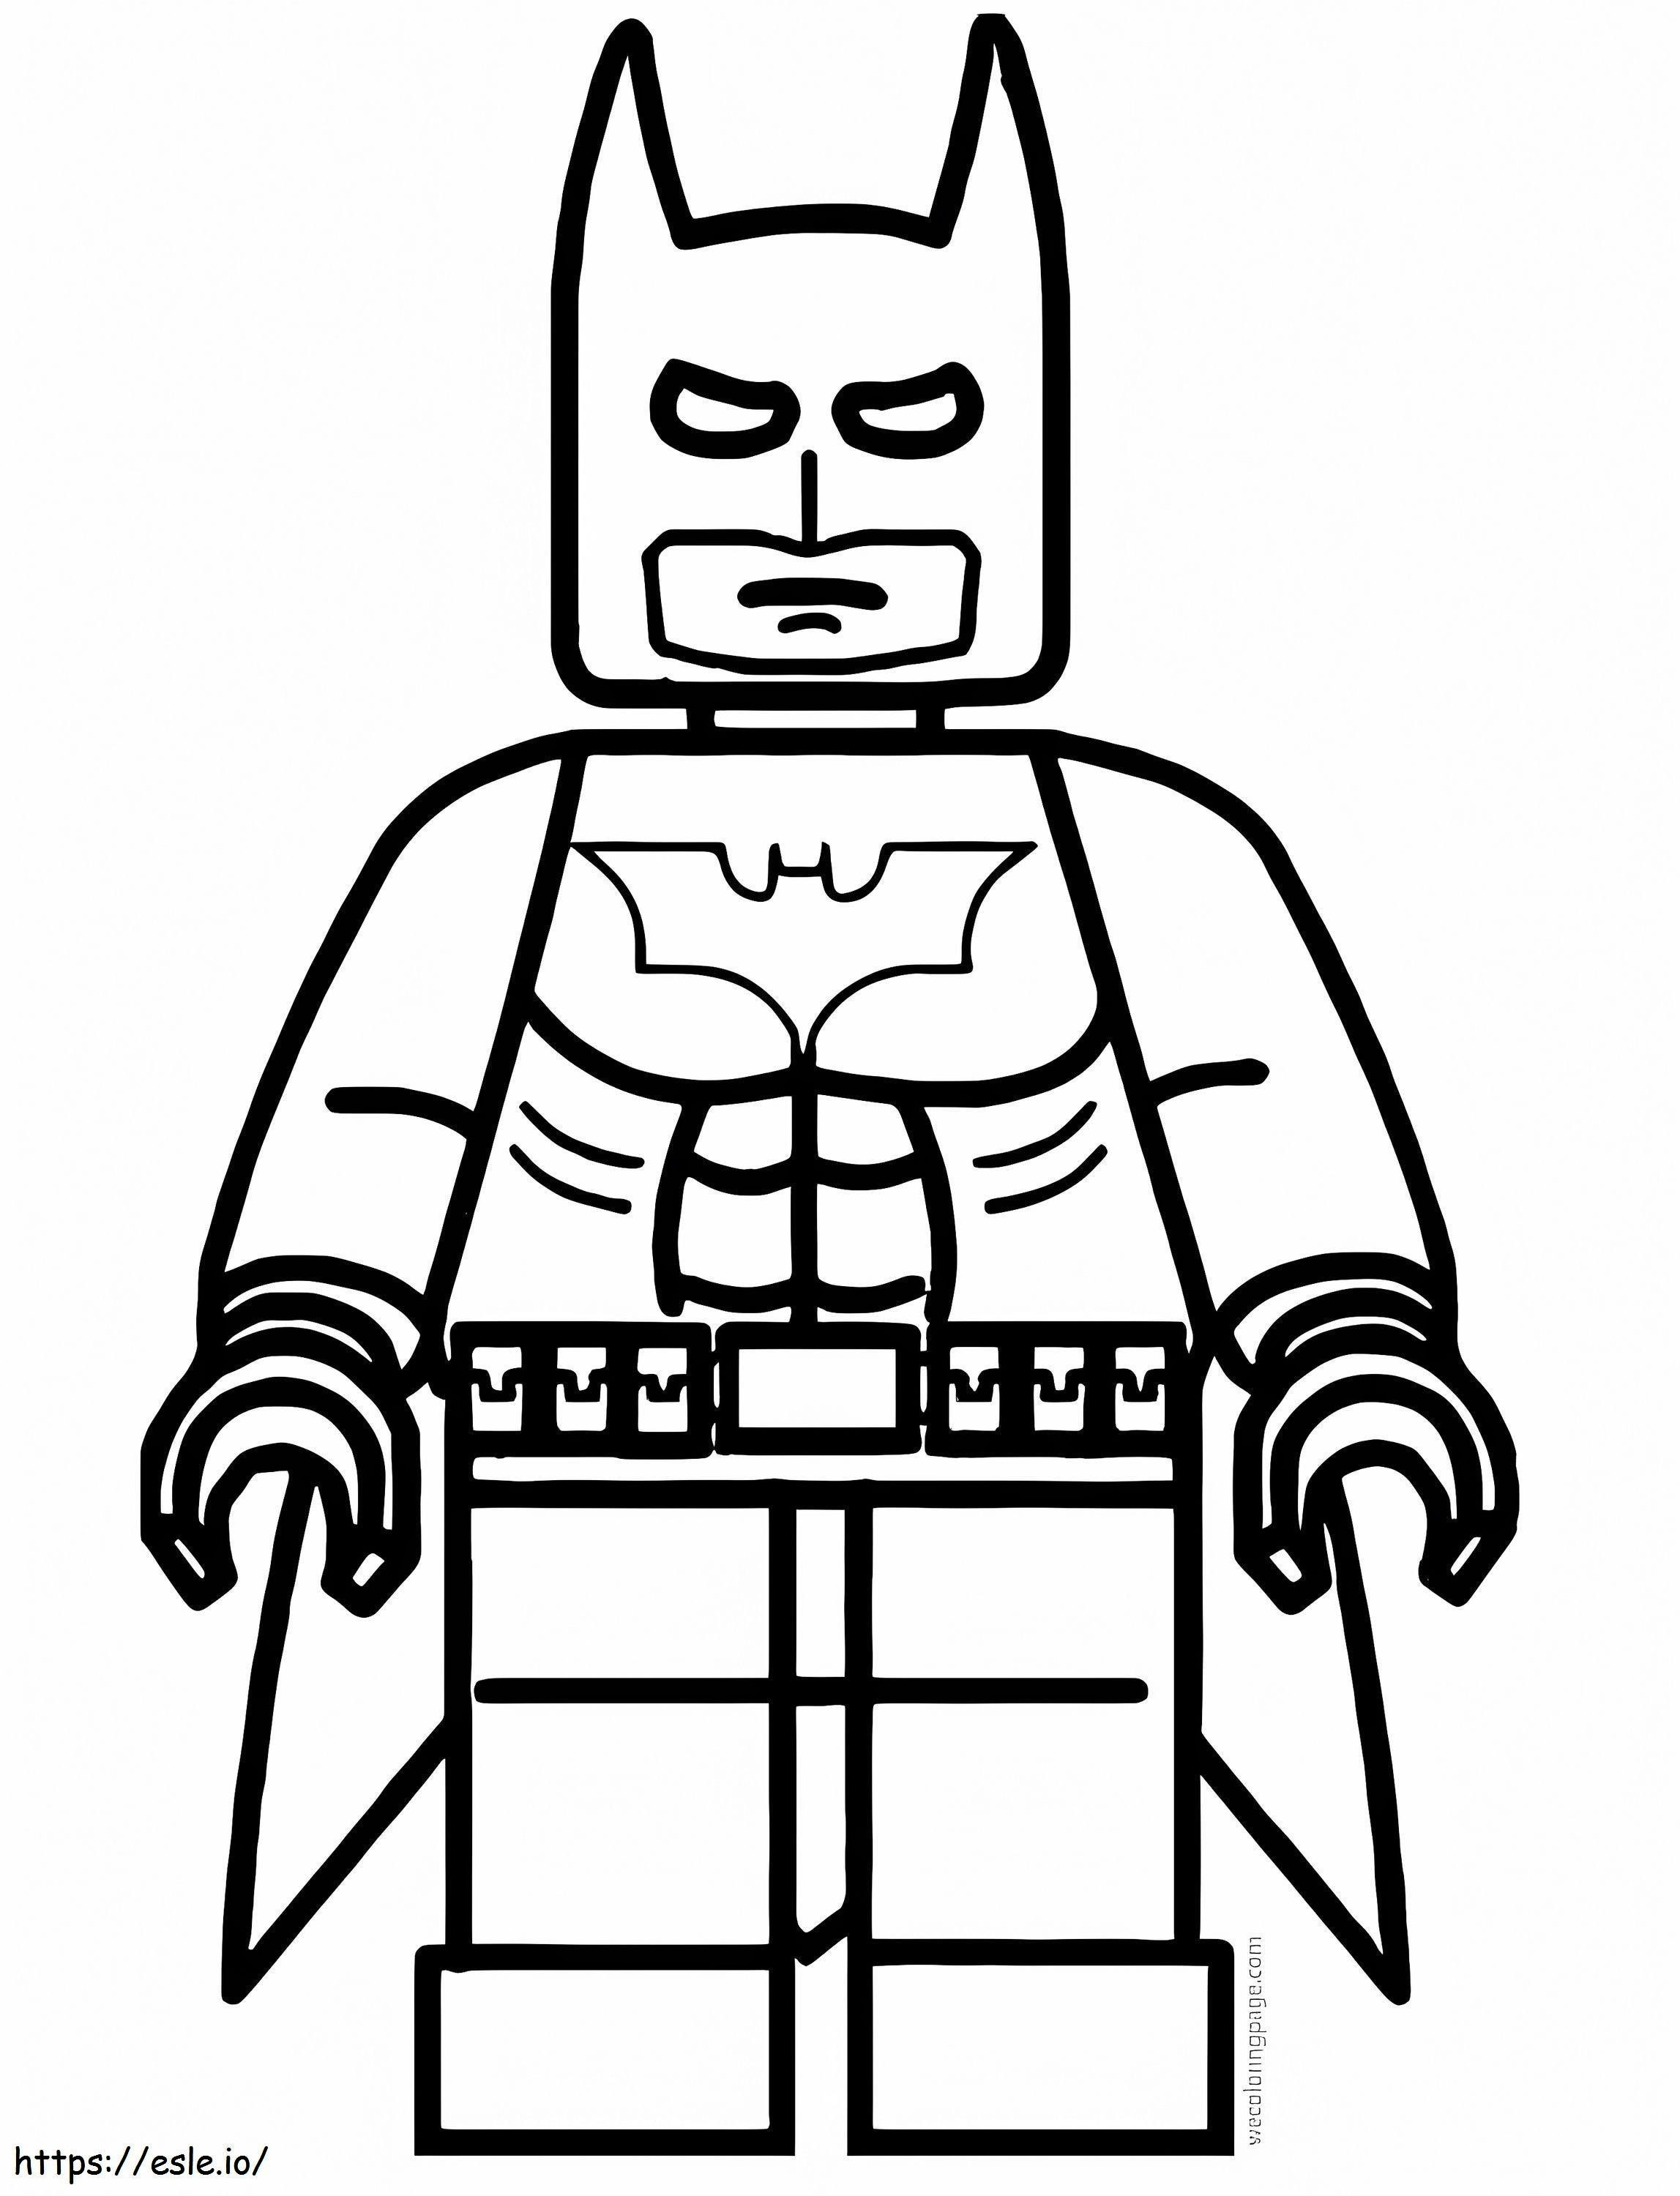 Cool Lego Batman coloring page